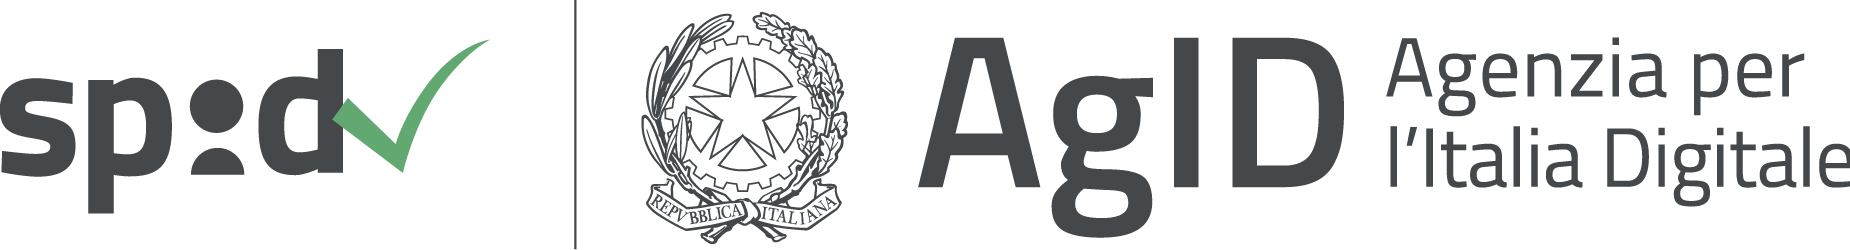 spid-agid-logo-lb